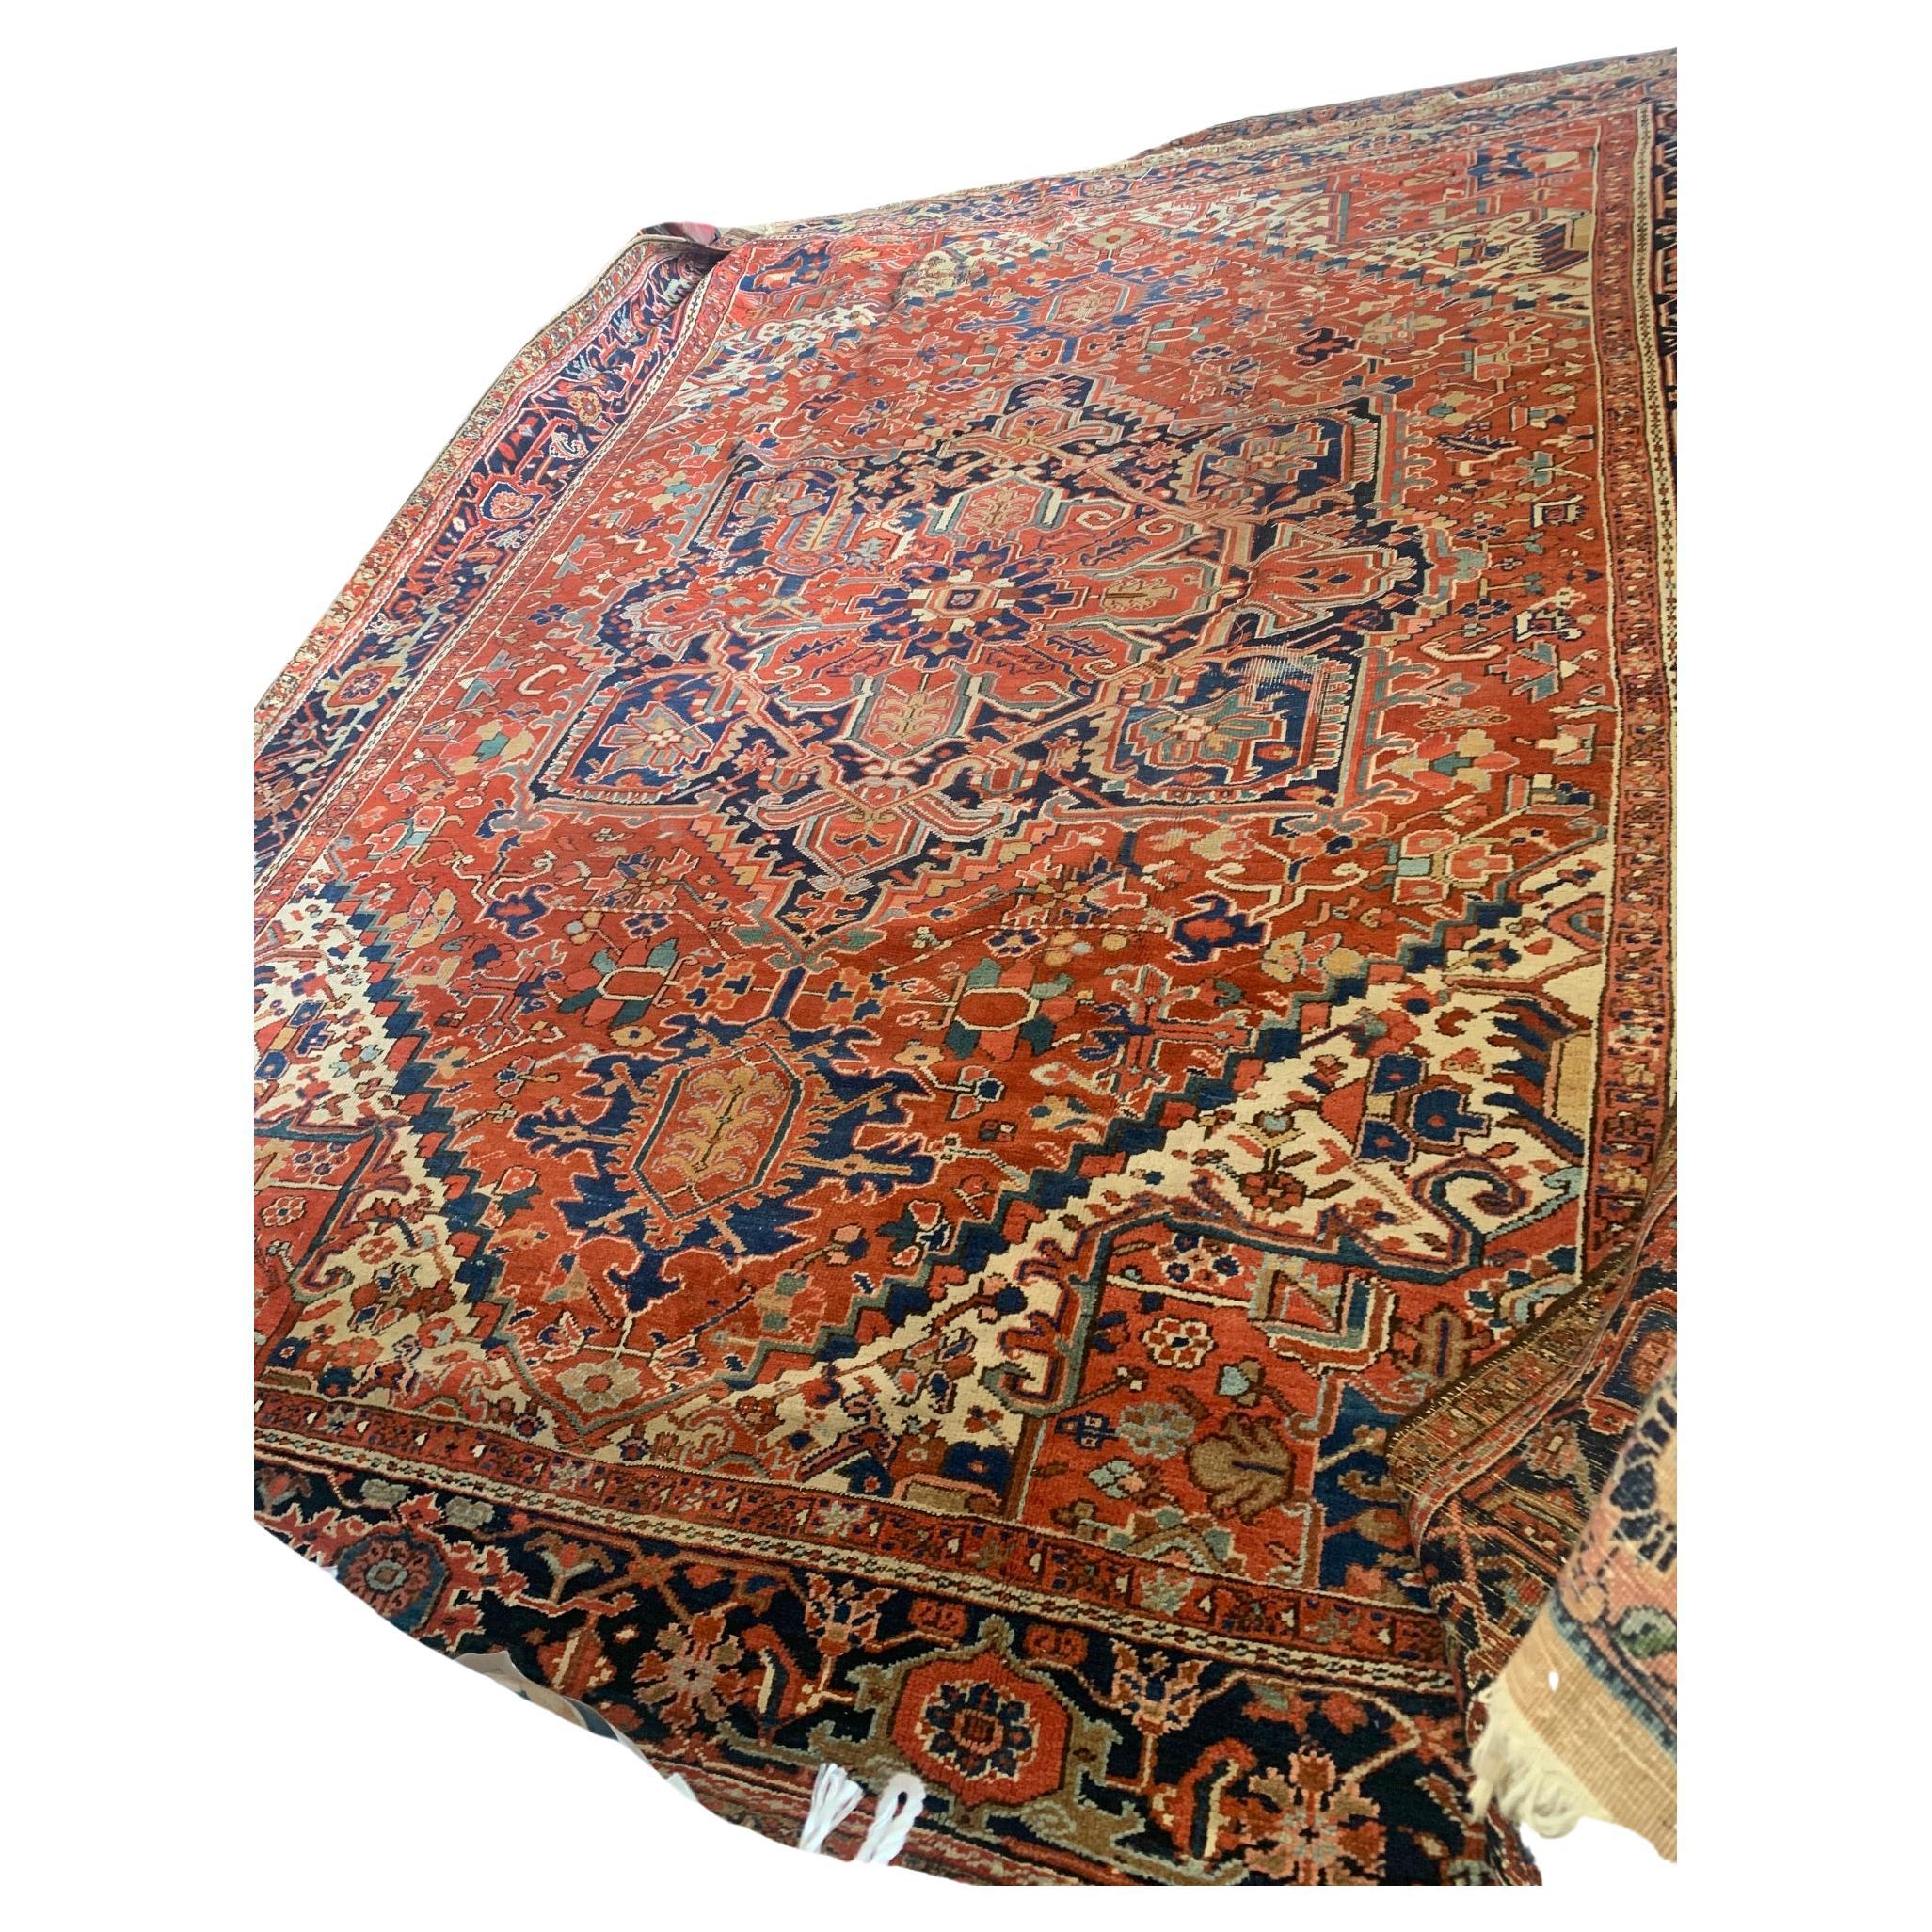 Handmade Antique Persian Style Heriz Rug 9.4' x 12.5', 1900s - 2B031 For Sale